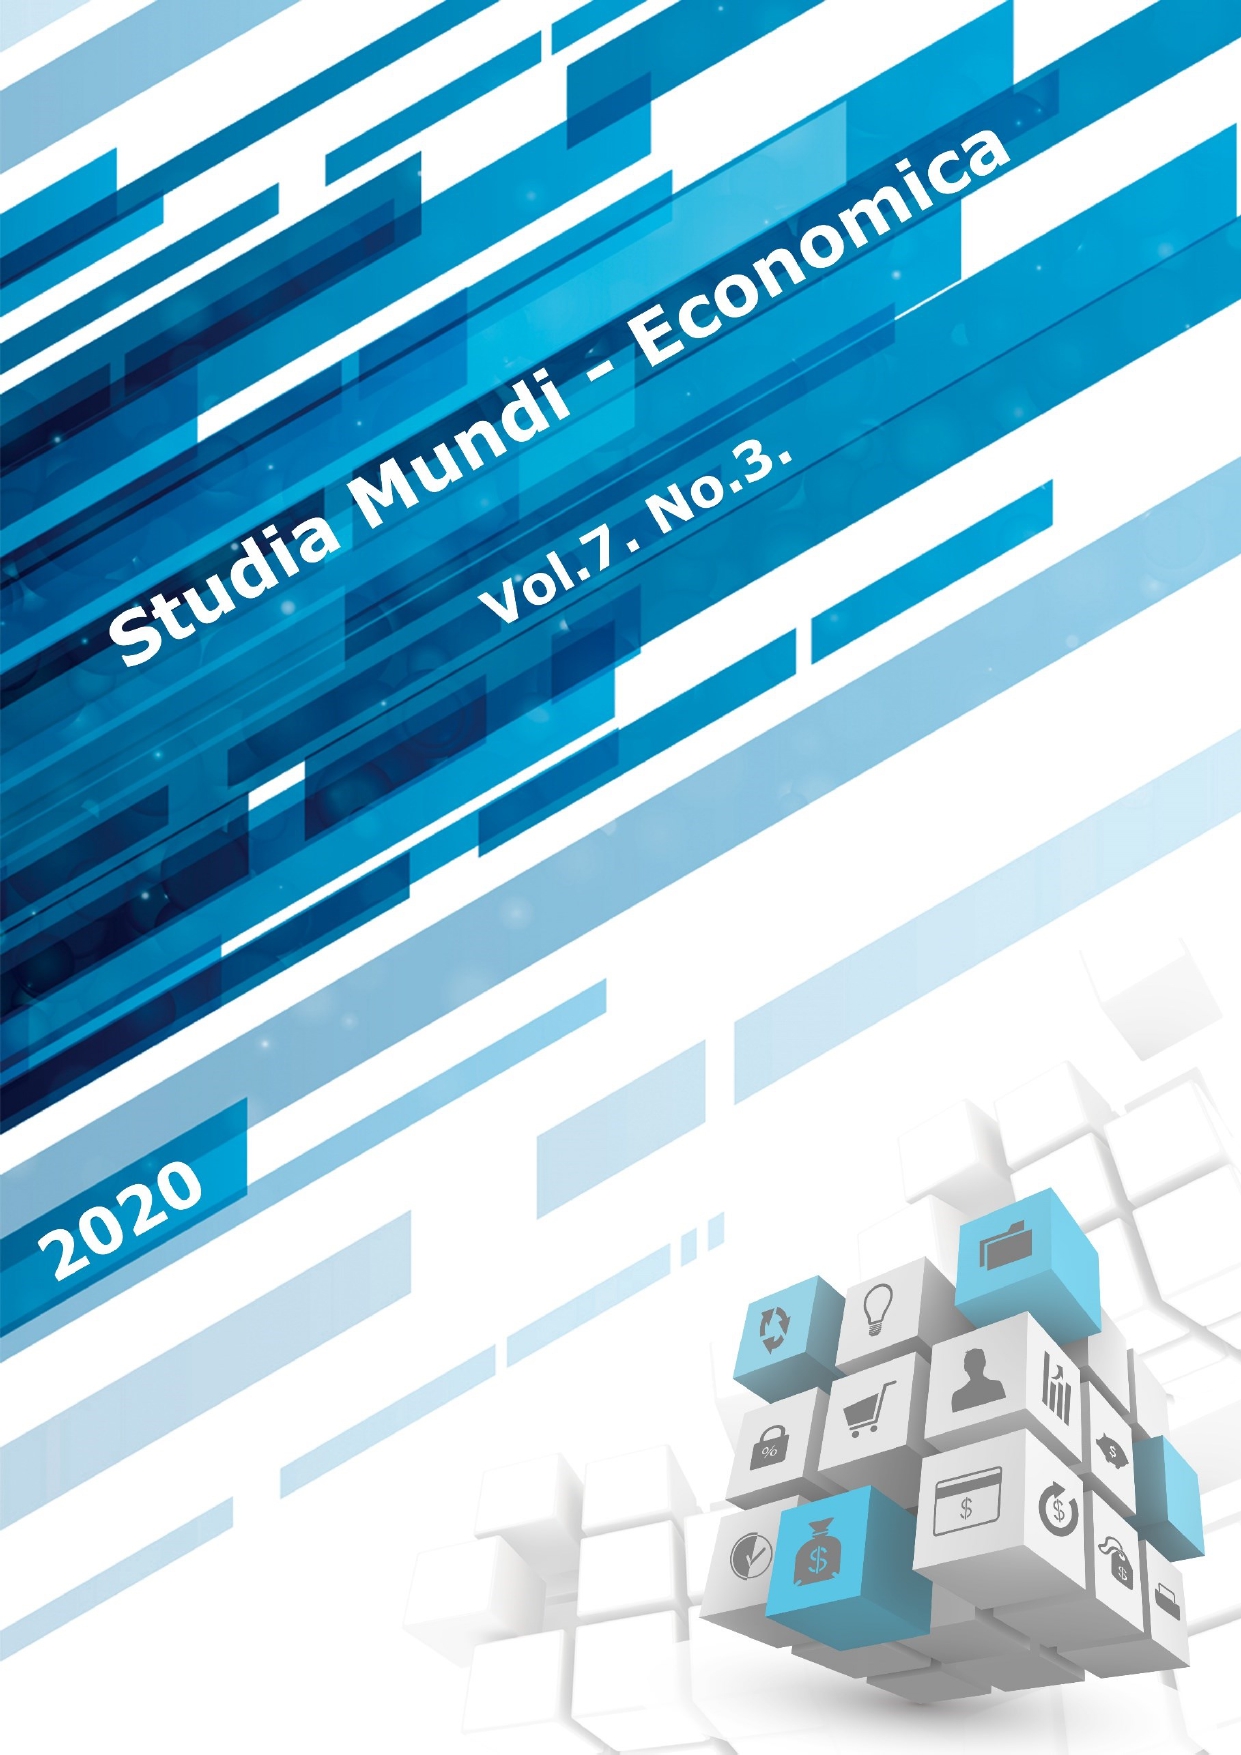 					View Évf. 7 Szám 3 (2020): Studia Mundi – Economica
				